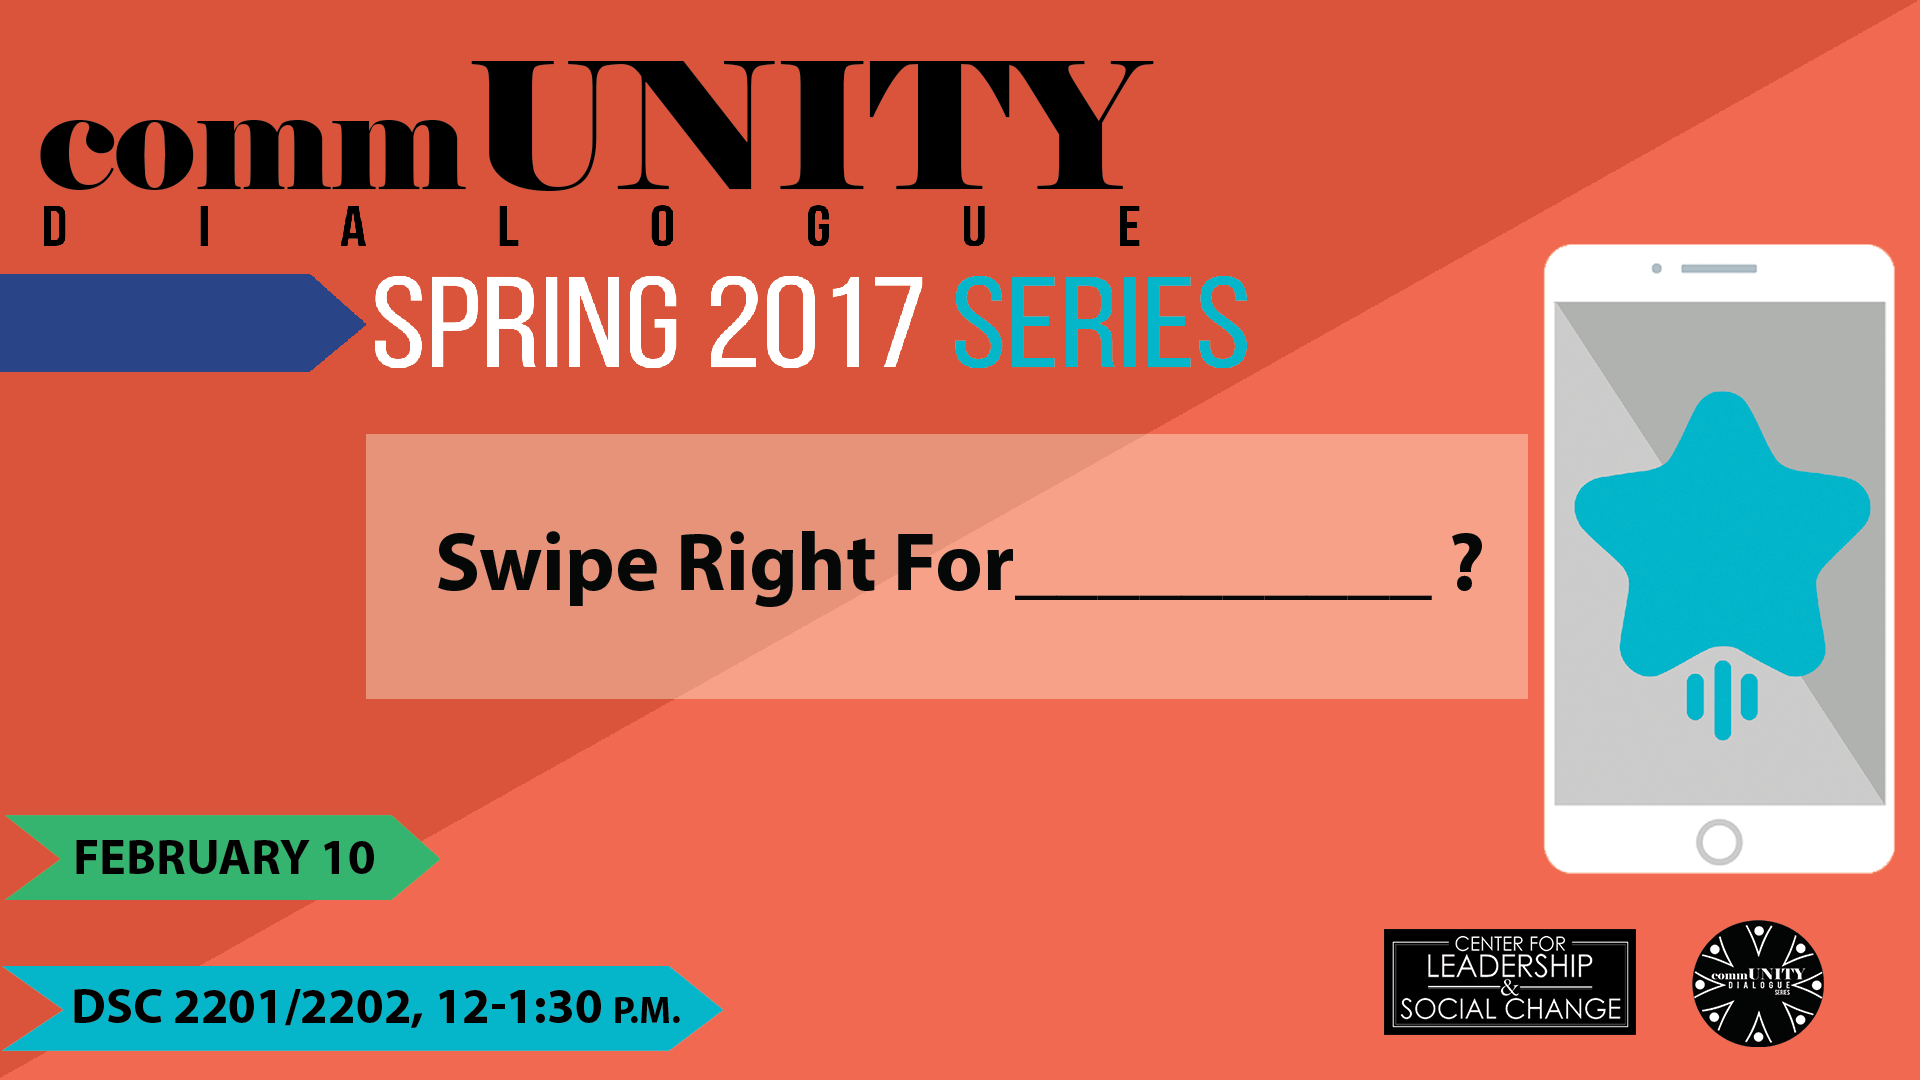 CommUNITY Dialogue: Swipe Right for _?, Friday, Feb. 10, 12 - 1:30 p.m., DSC 2201/2202